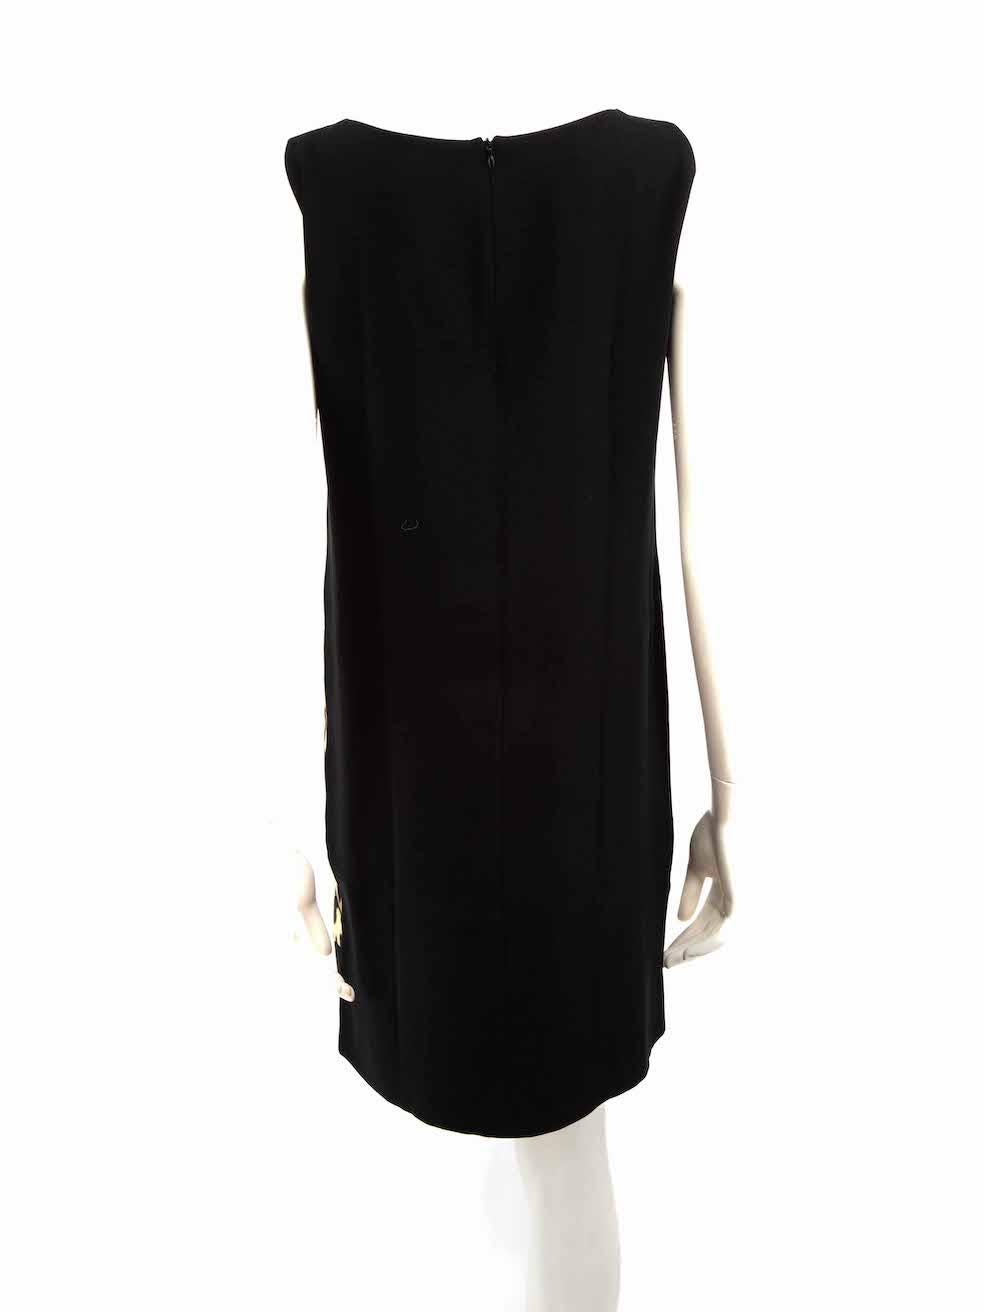 Moschino Moschino Cheap & Chic Mini robe à empiècements noir et léopard Taille L Bon état - En vente à London, GB